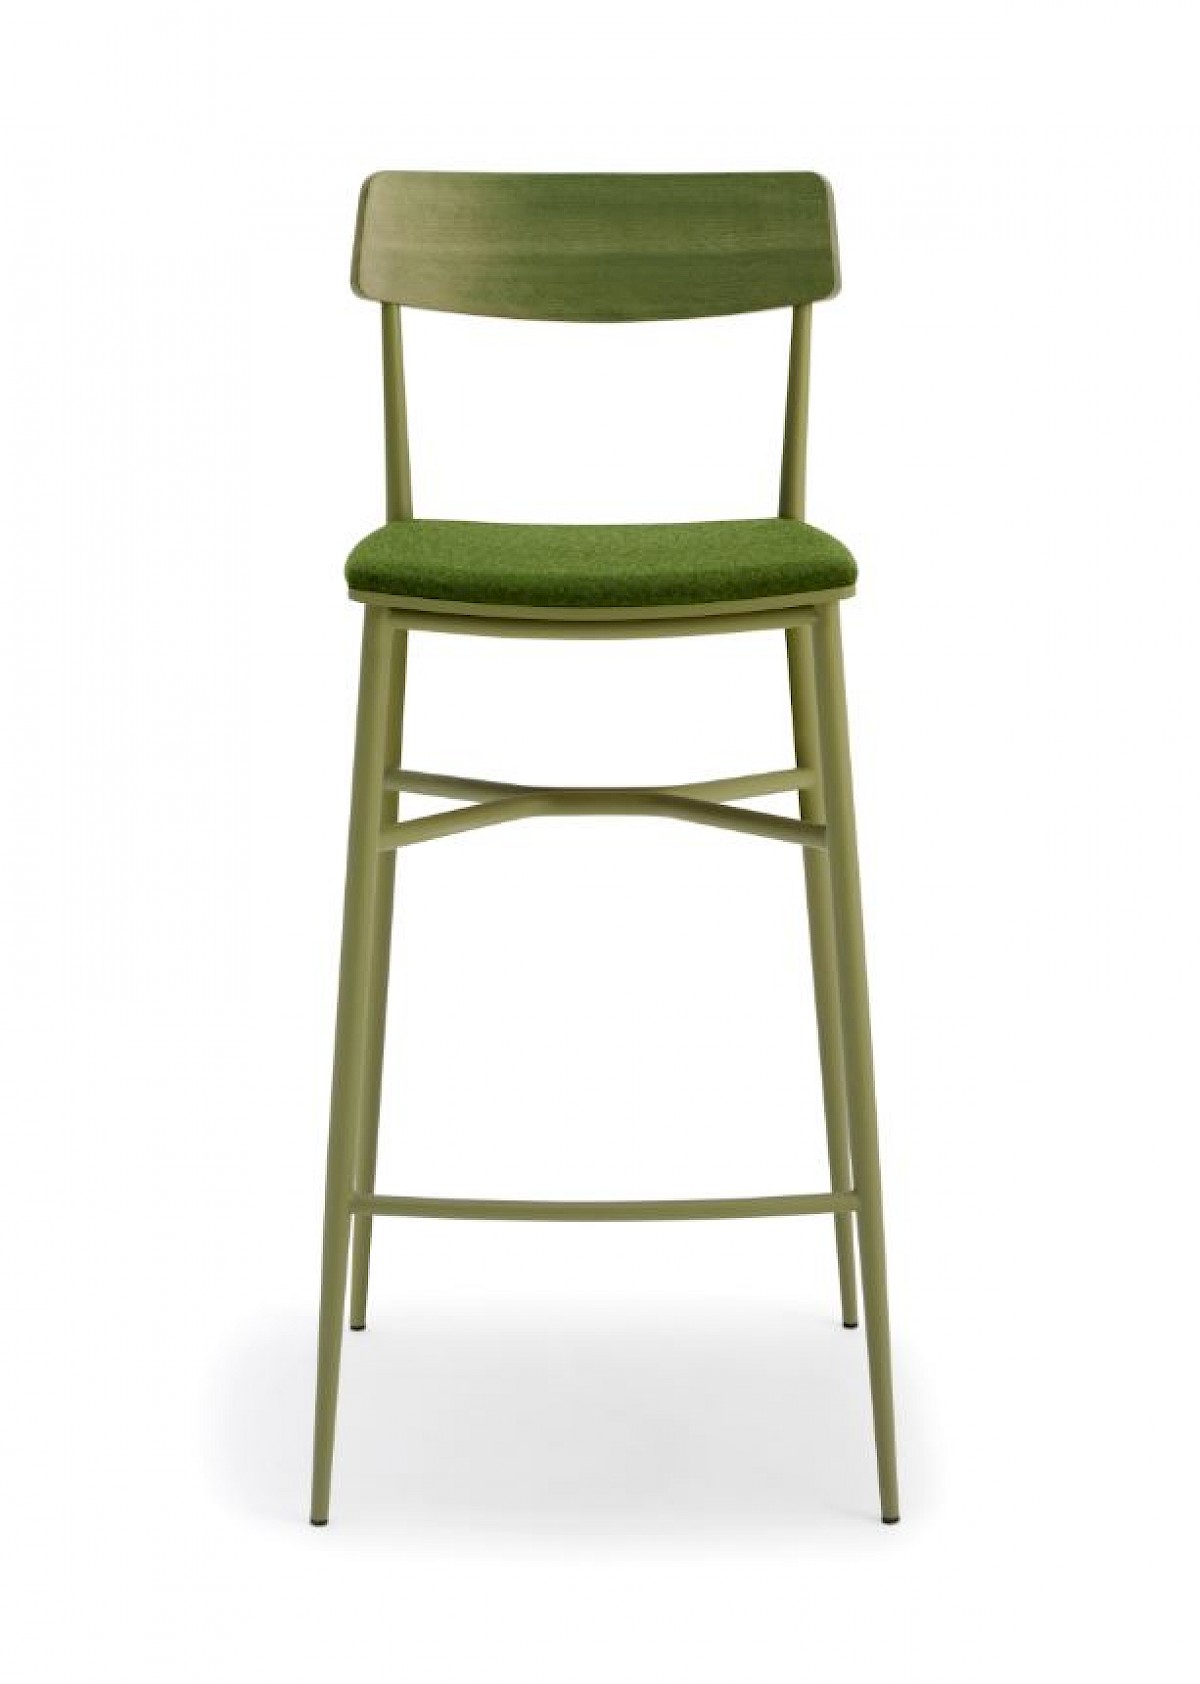 Match chair. Стул барный by003. Ikea Persby стул. Барный стул зеленый. Стул барный зеленый дерево.